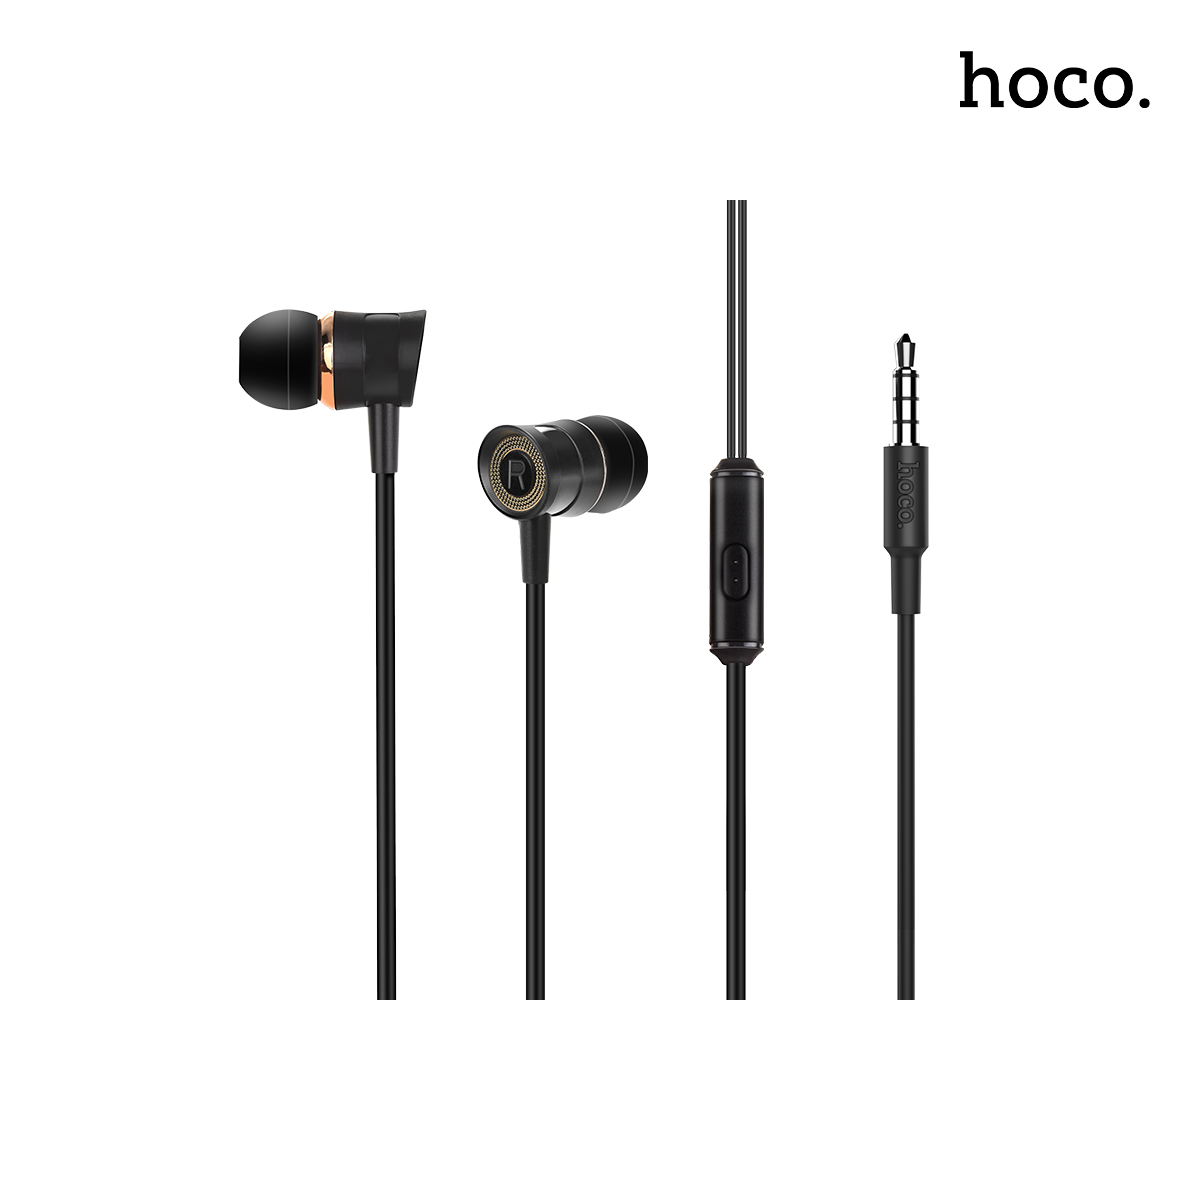 HOCO Pleasant Sound Universal Earphones with Microphone – M37